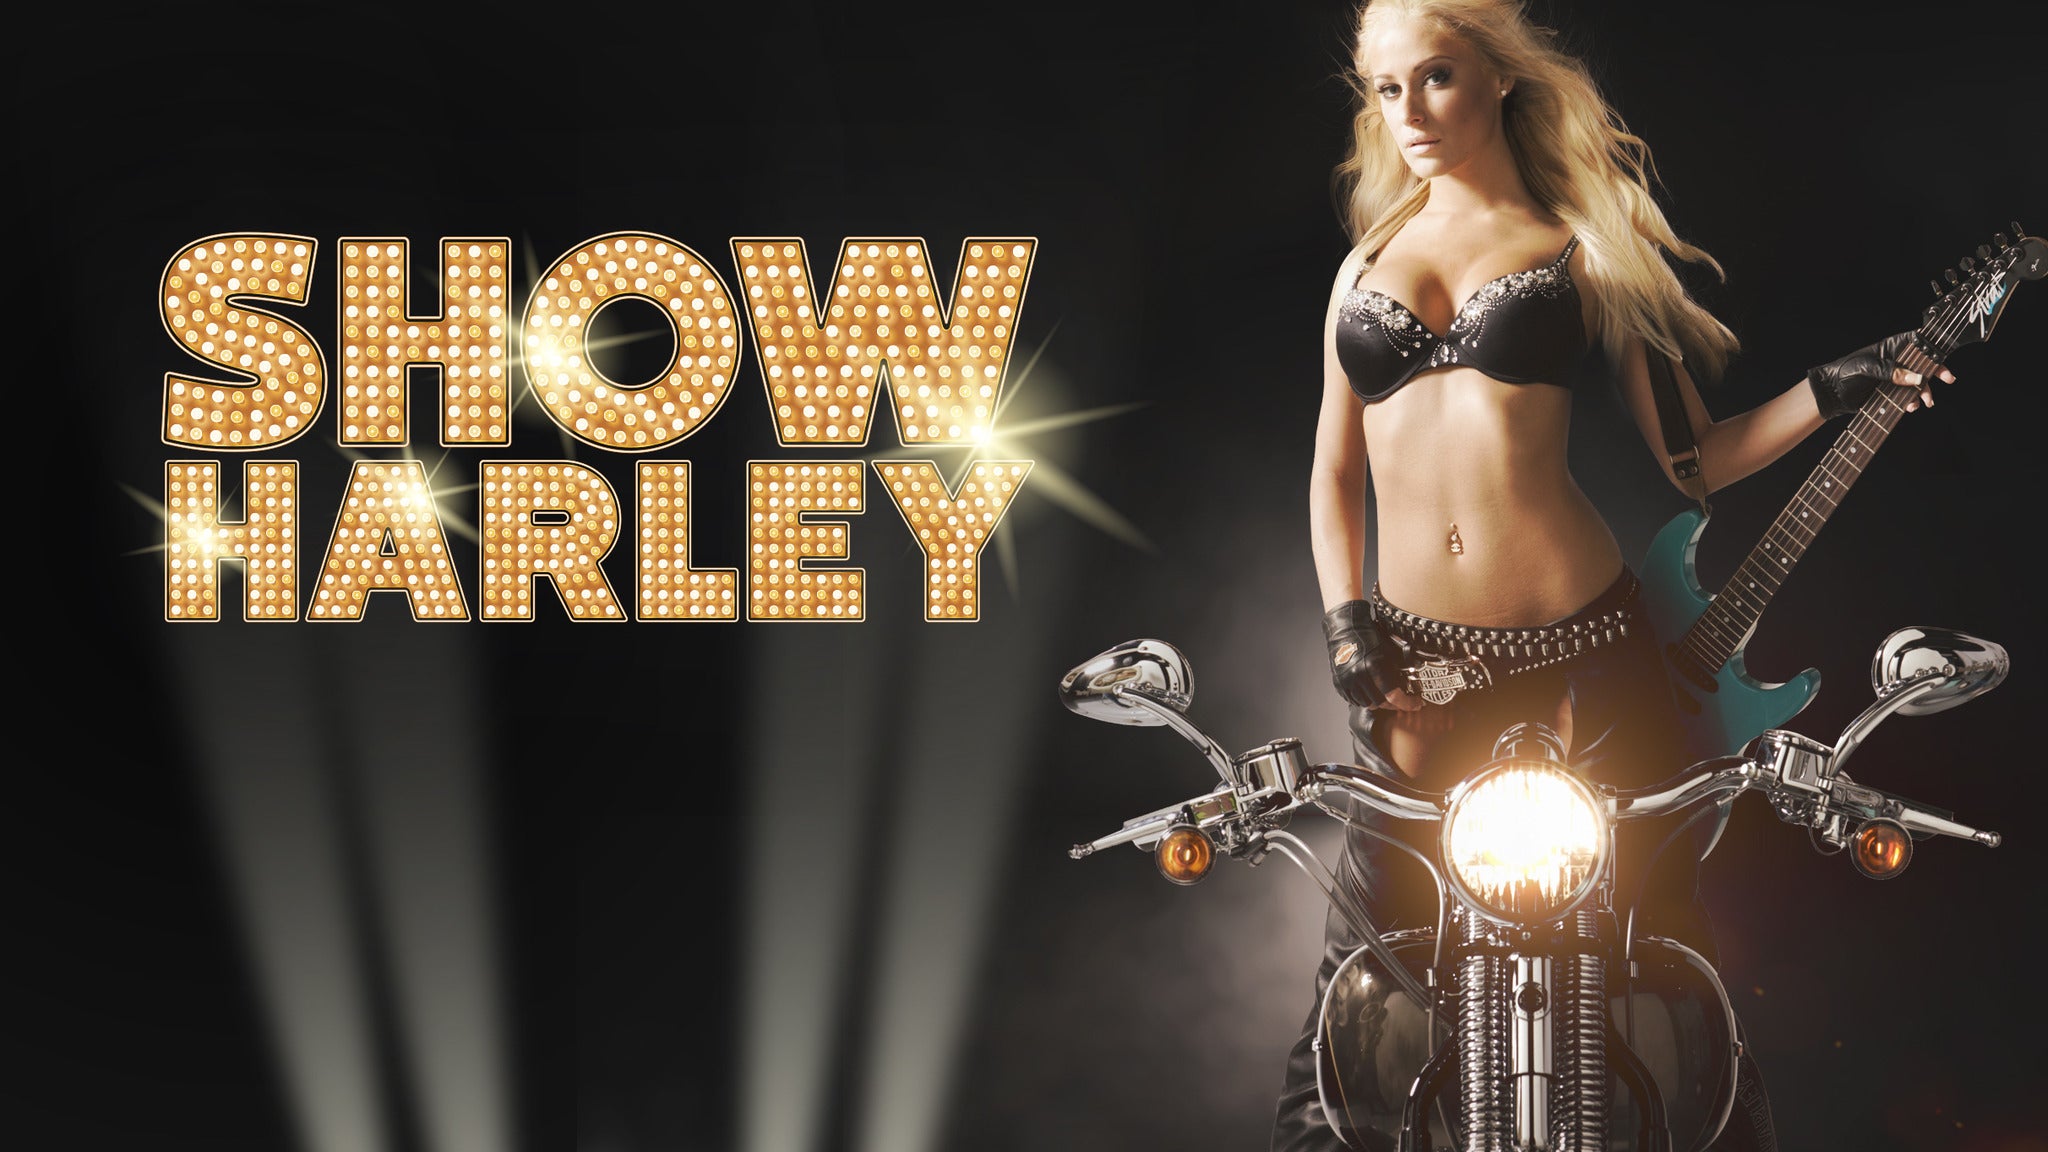 Le Show Harley 2020 in Montreal promo photo for Prévente Evenko presale offer code